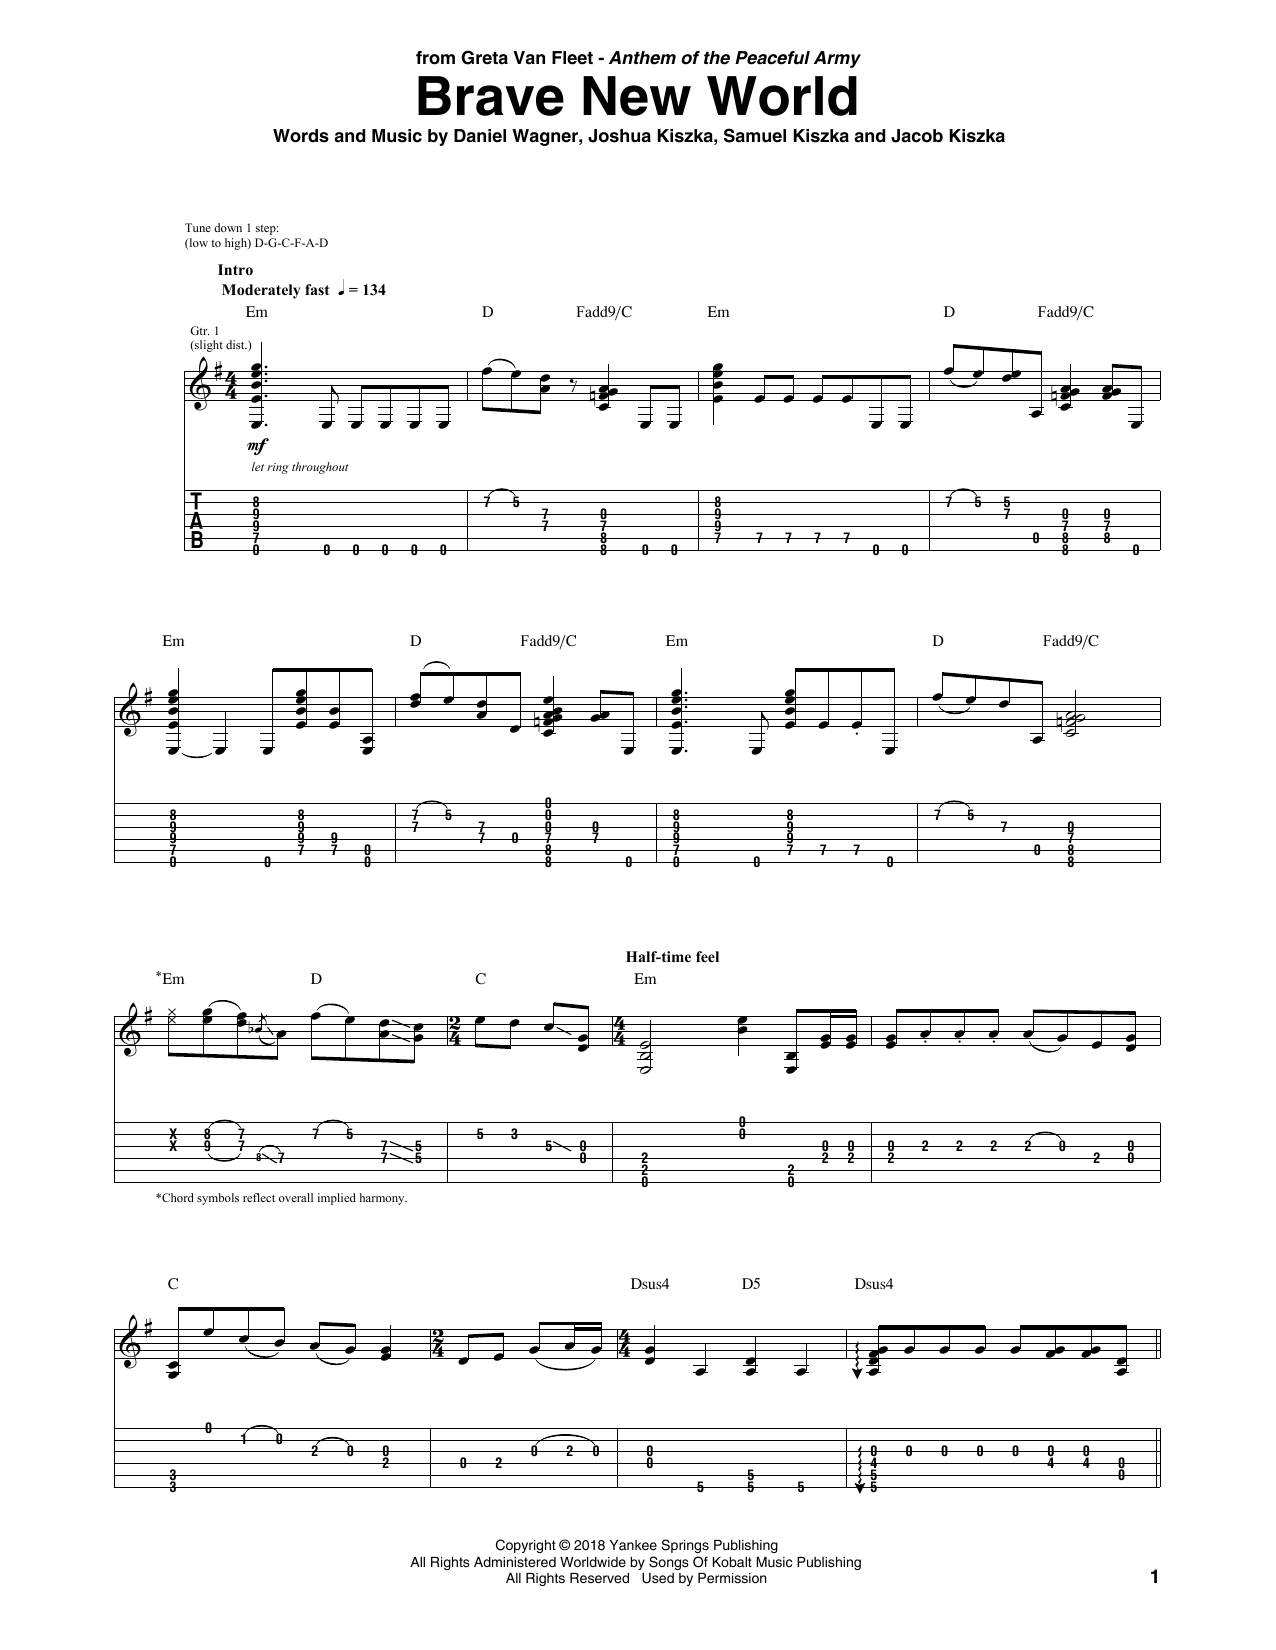 Greta Van Fleet Brave New World Sheet Music Notes & Chords for Guitar Tab - Download or Print PDF